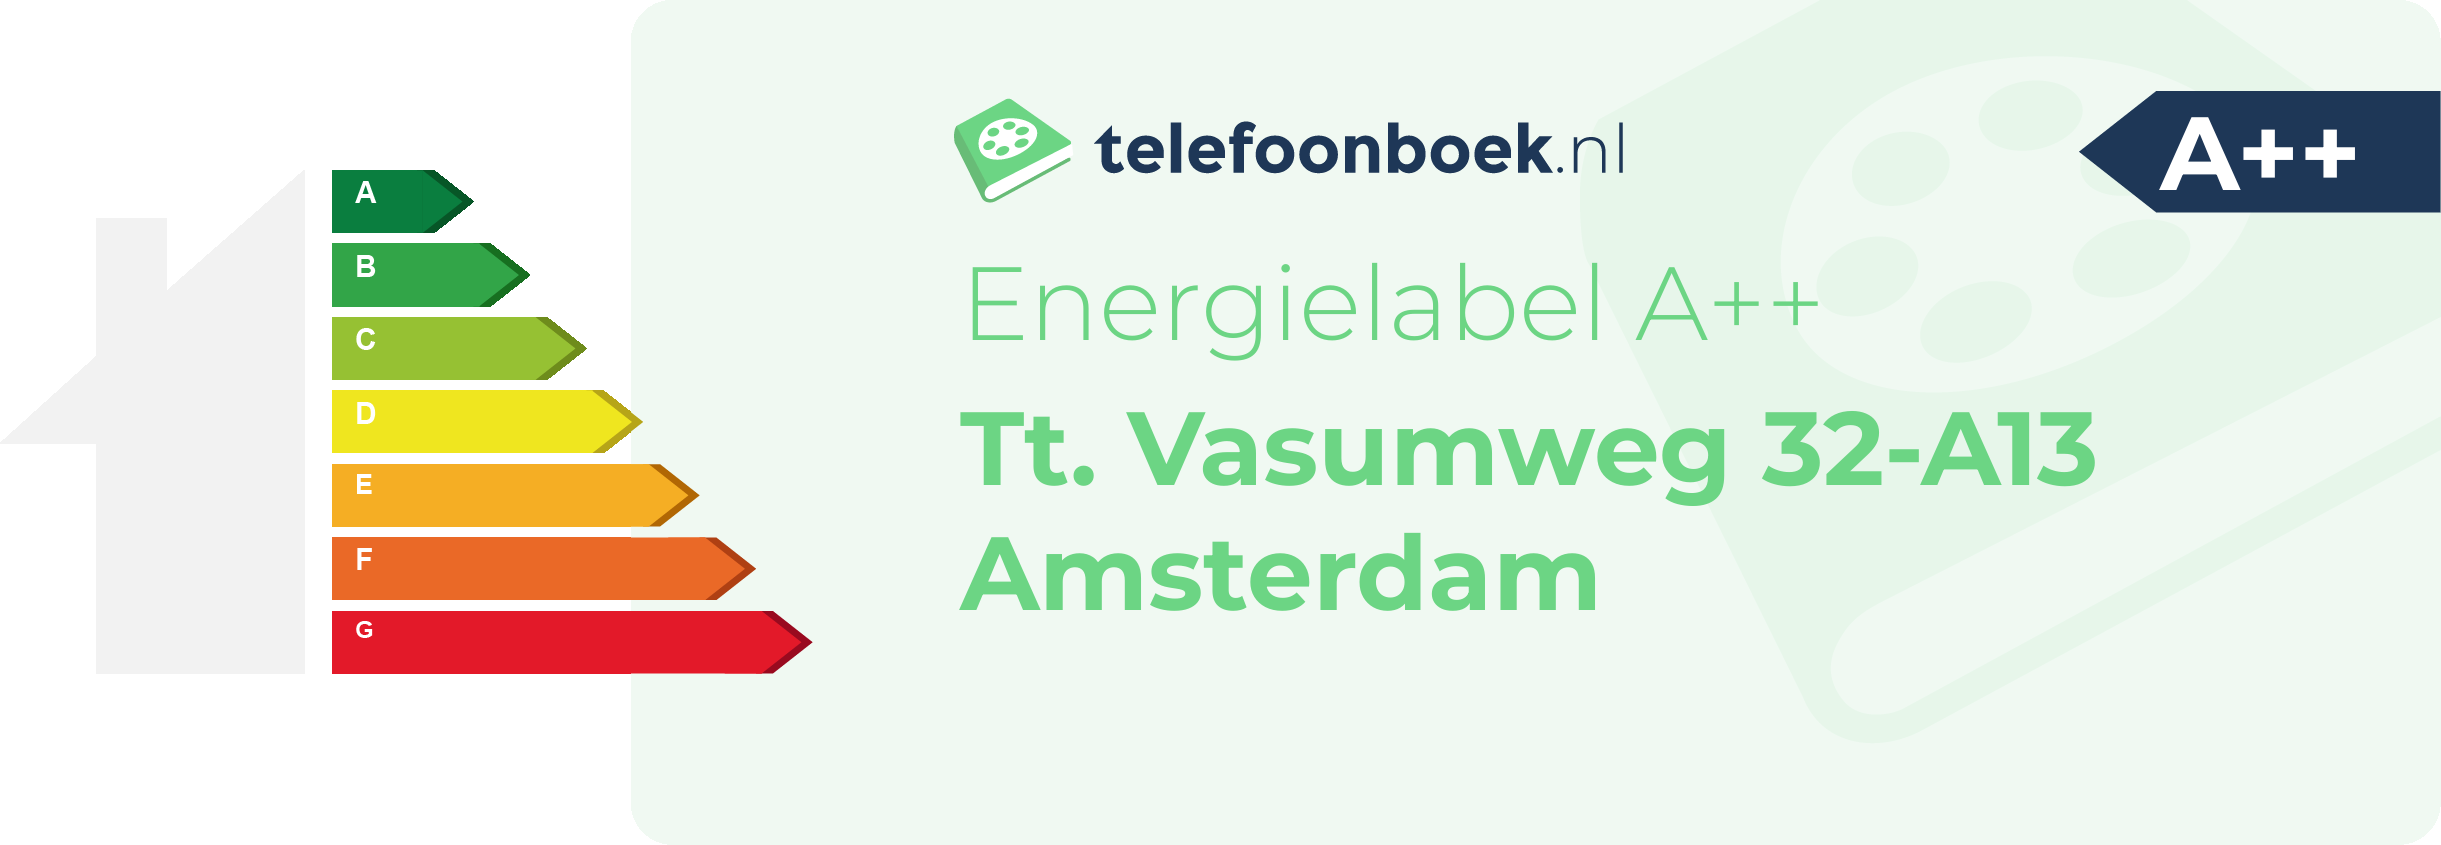 Energielabel Tt. Vasumweg 32-A13 Amsterdam